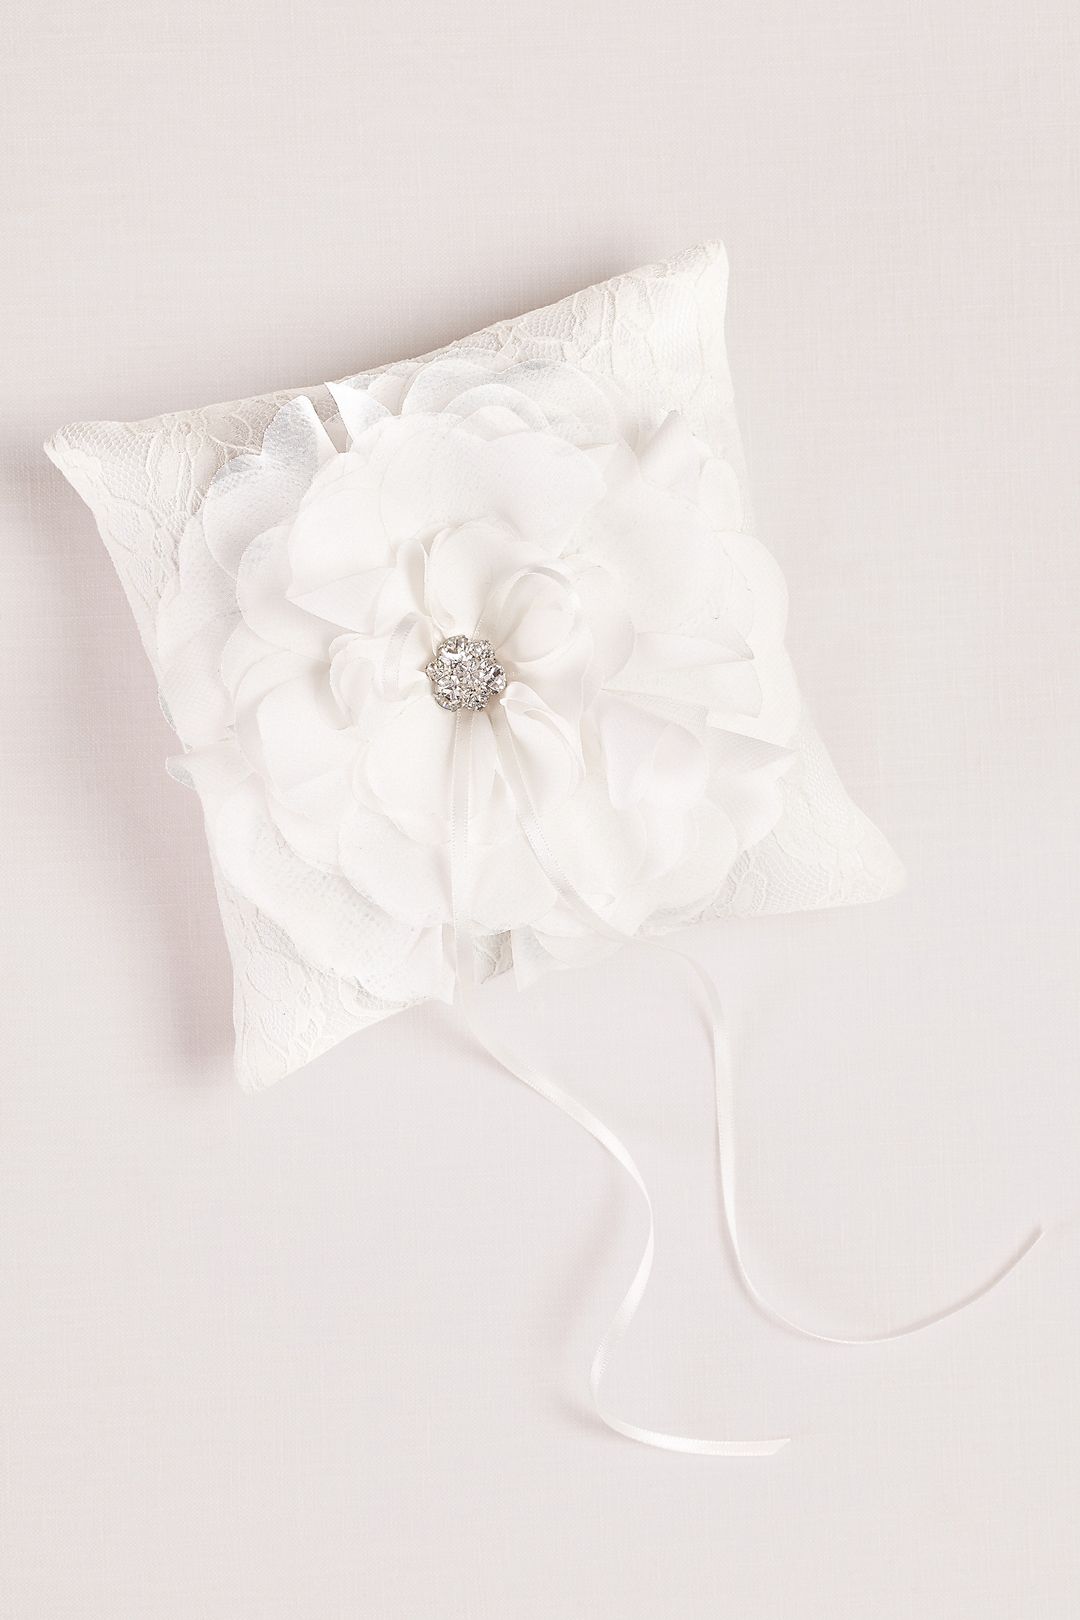 Layered Flower Ring Pillow Image